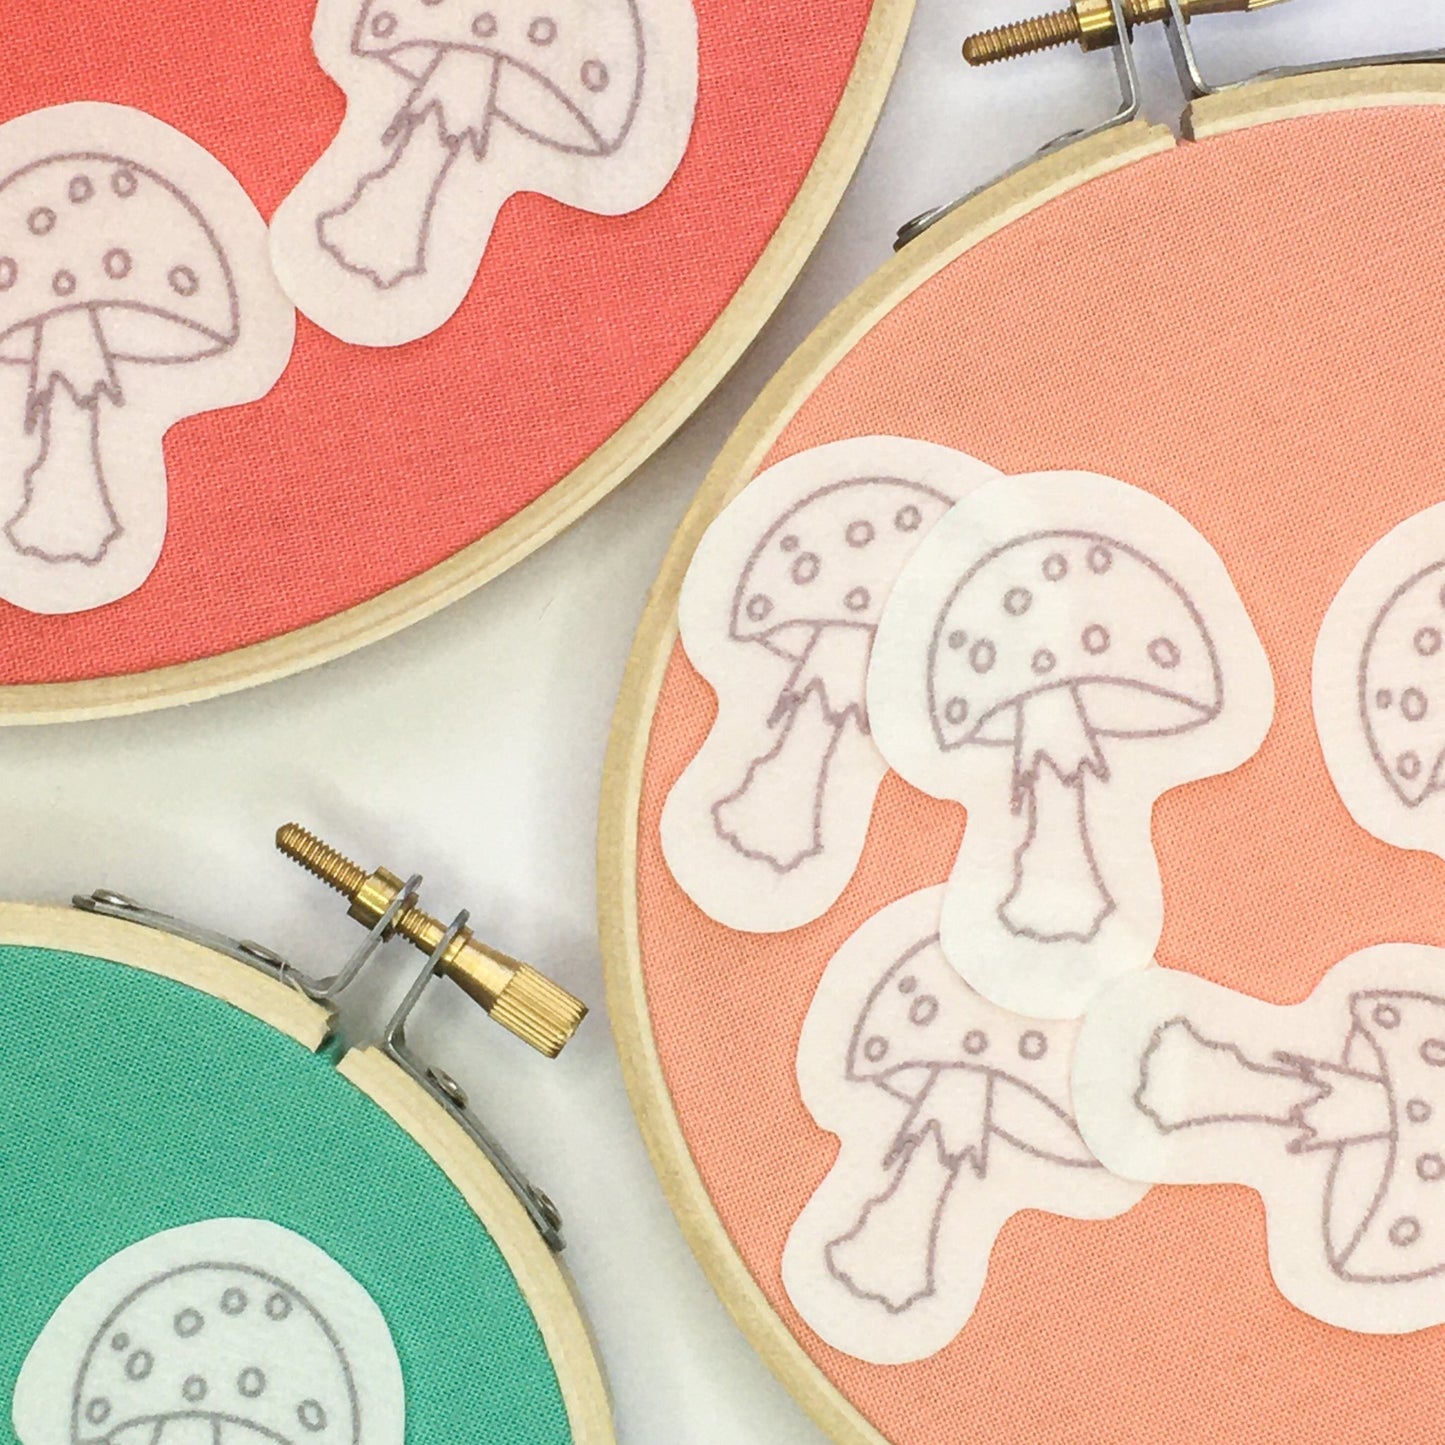 Mushroom Stick and Stitch Embroidery Stickers - Craft Make Do